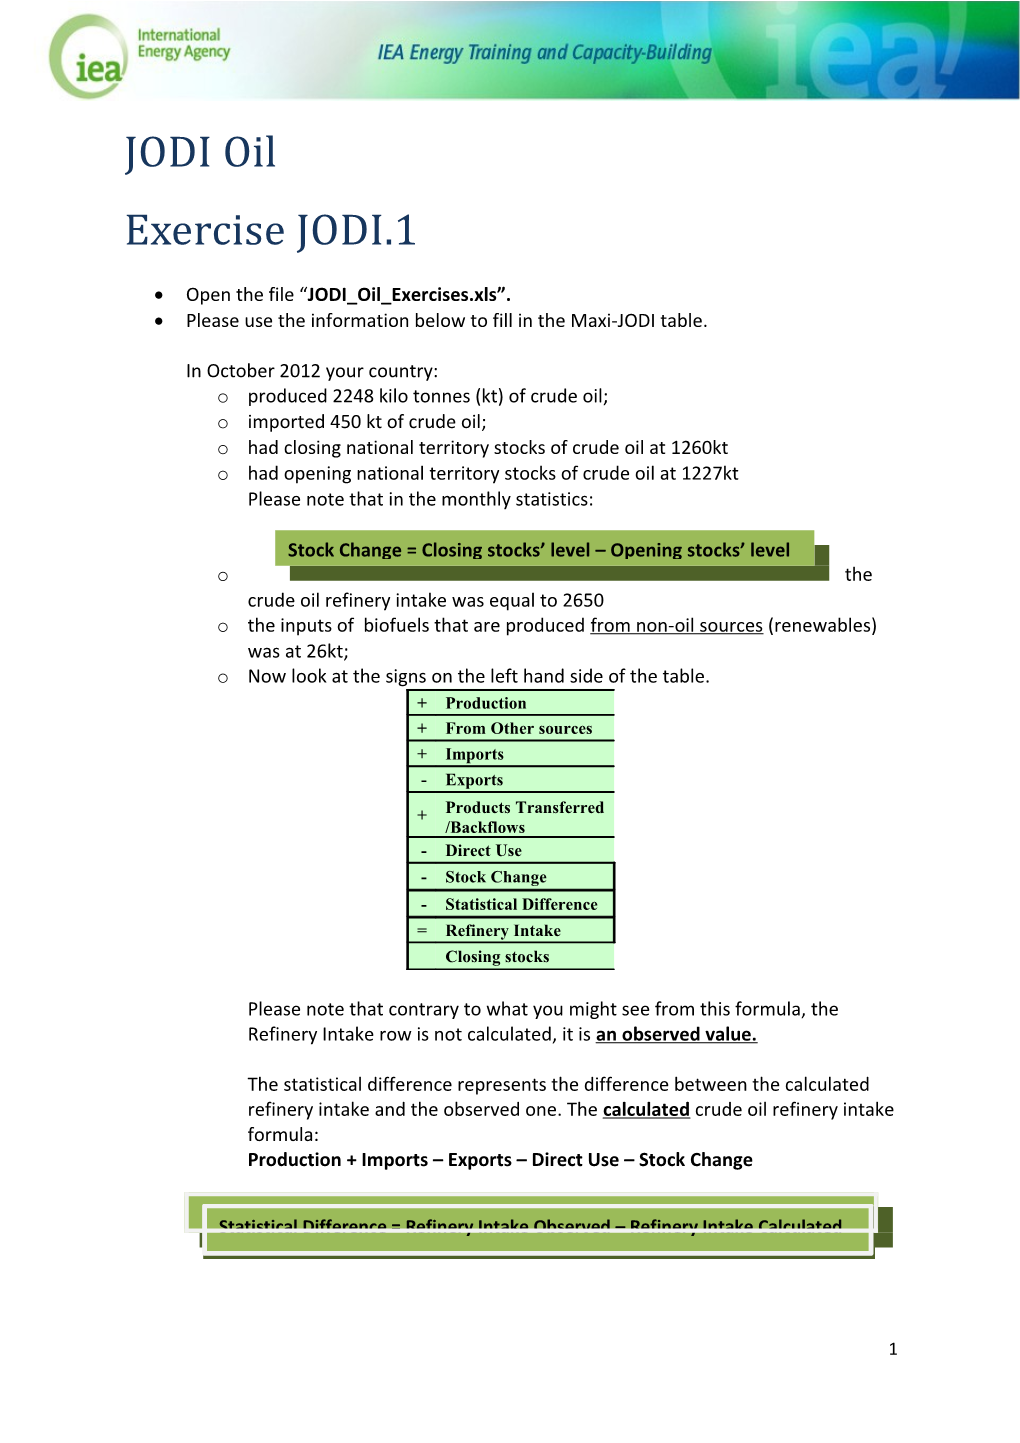 Exercise JODI.1